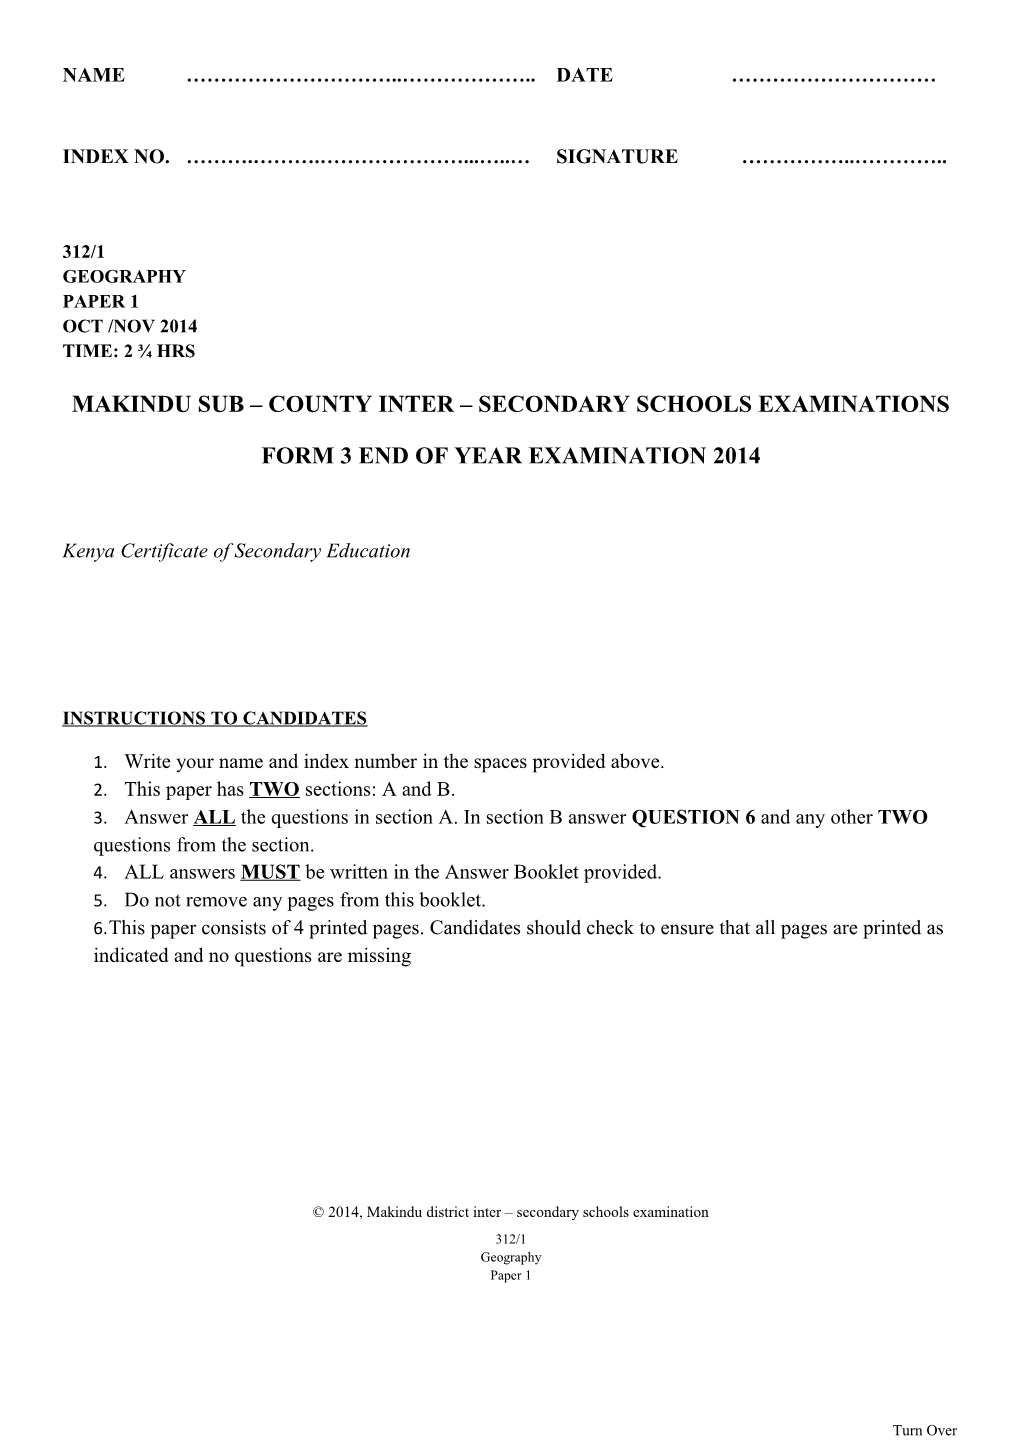 Makindu Sub County Inter Secondary Schools Examinations